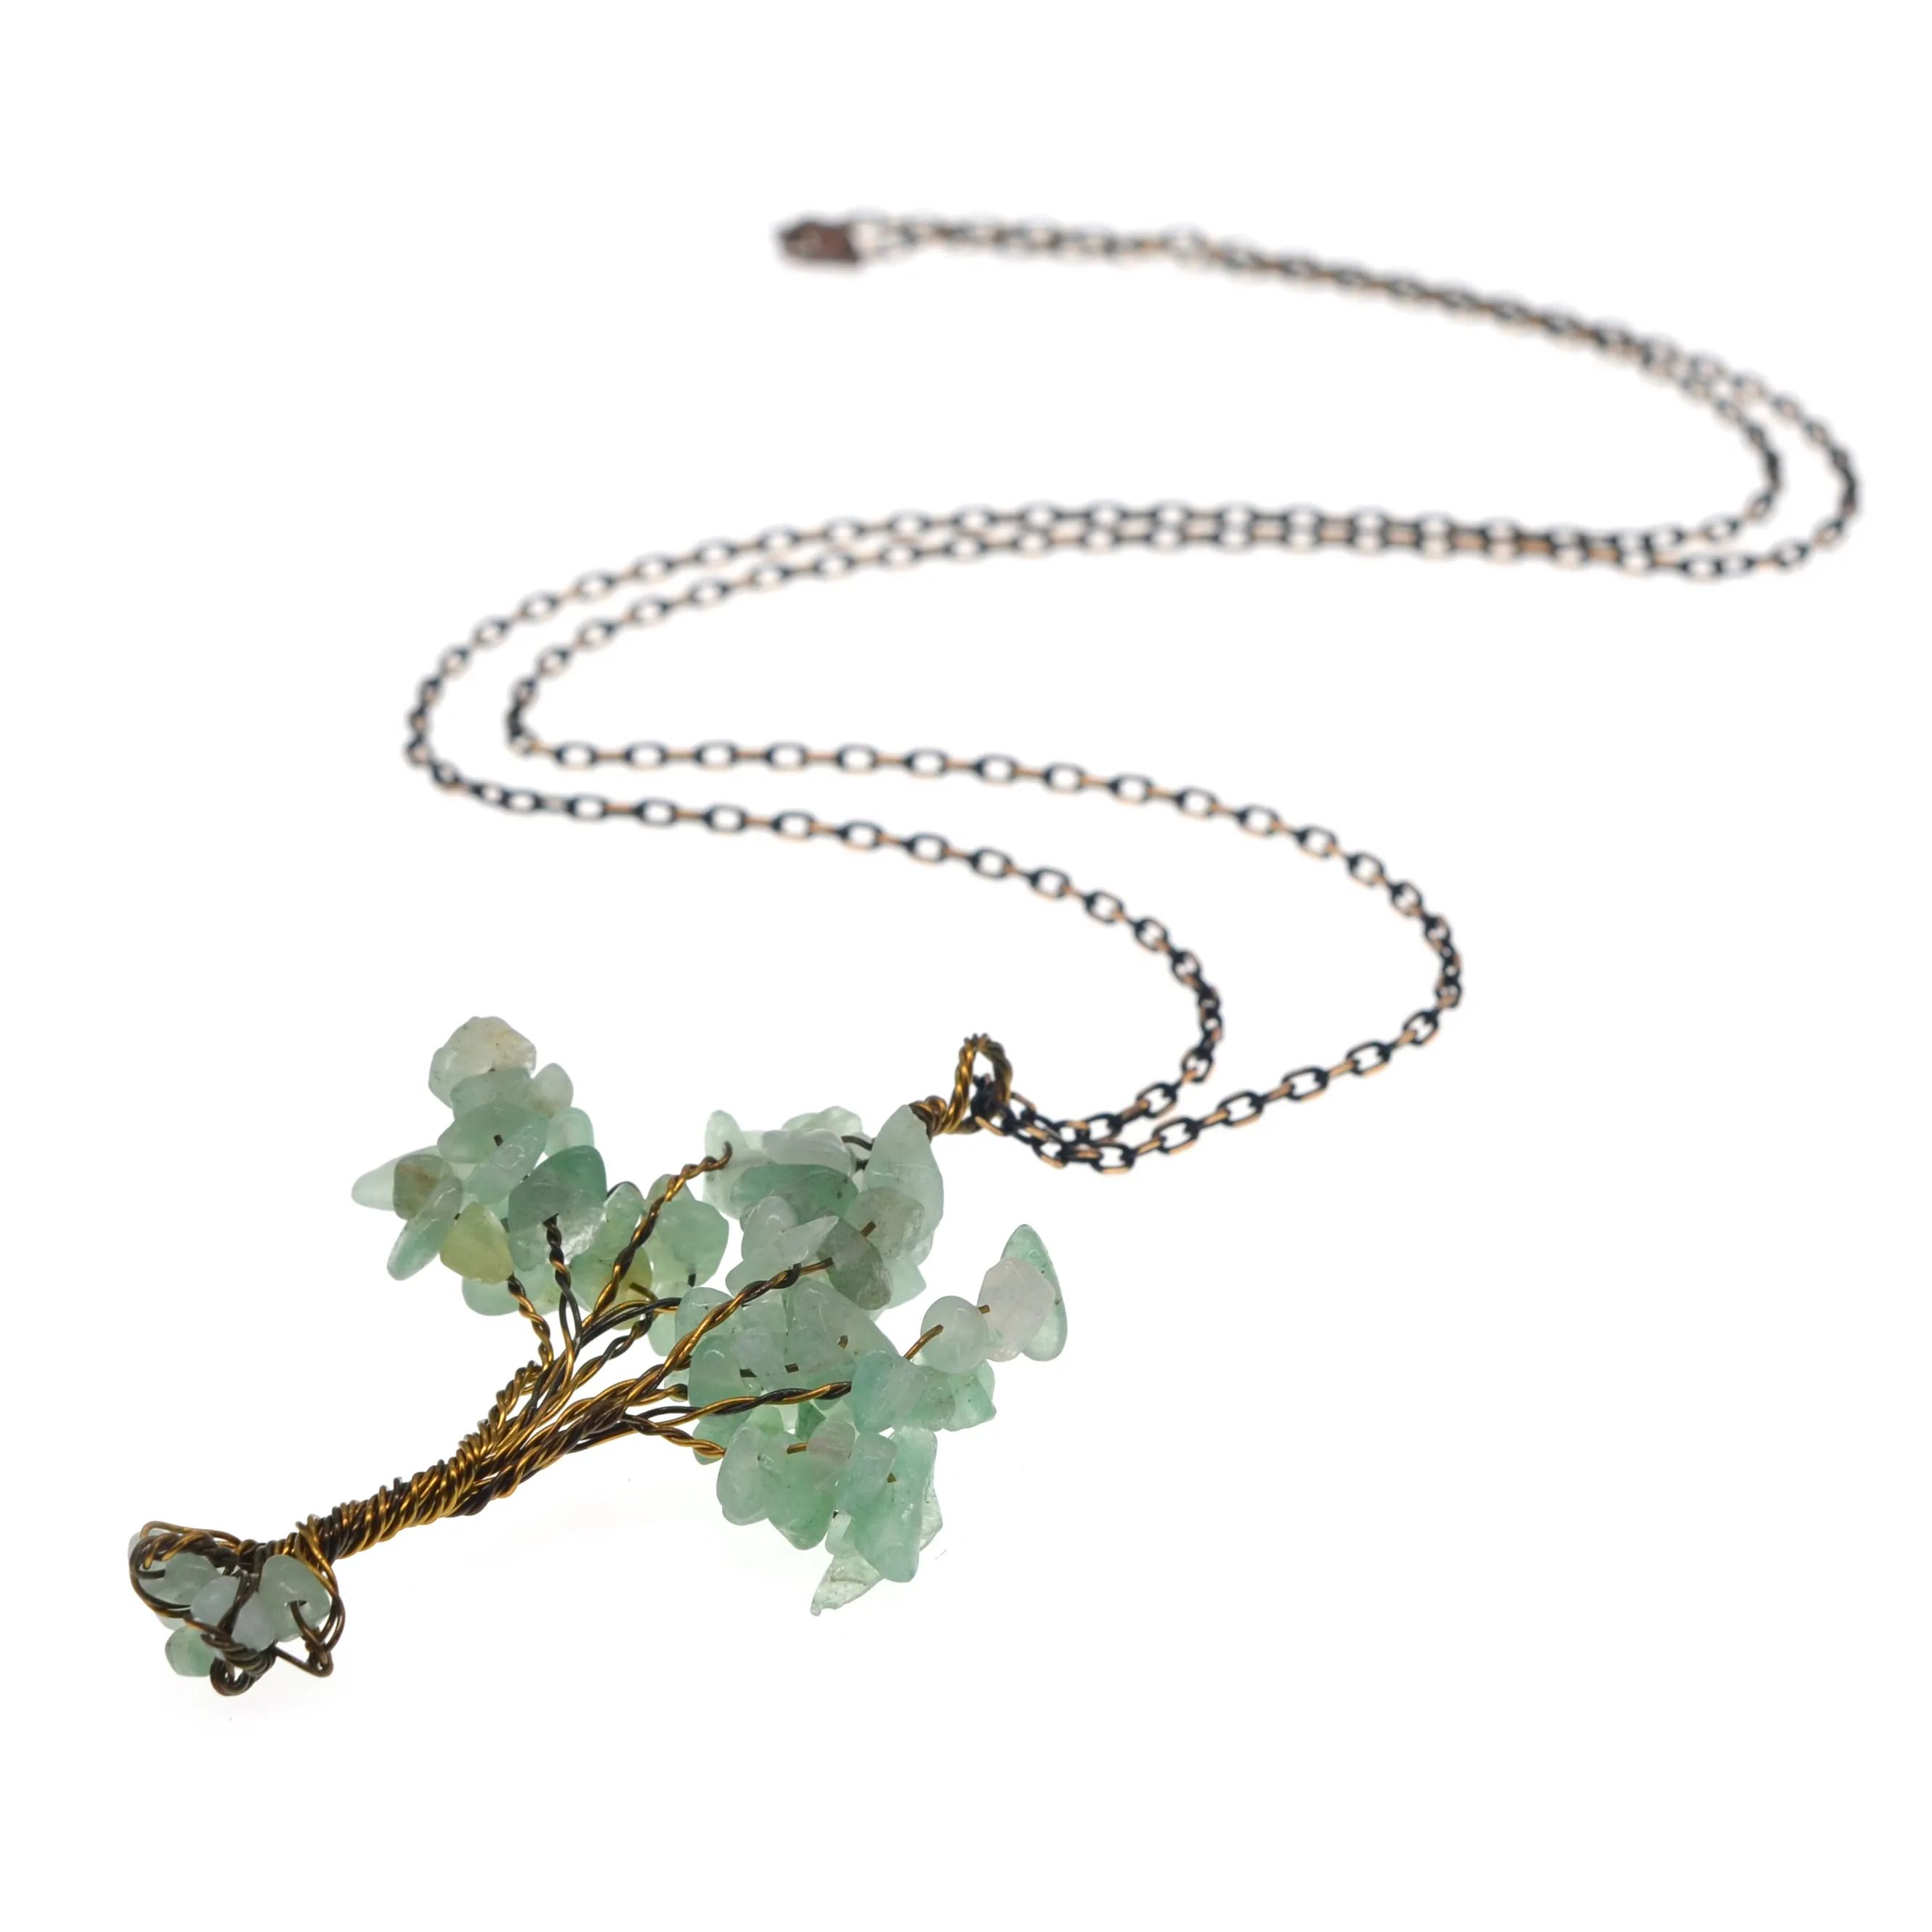 Natural Edelsteinperlen Baum des Lebens Anhänger Amethyst Rose Kristall Halskette Edelstein Chakra Jewelry333d